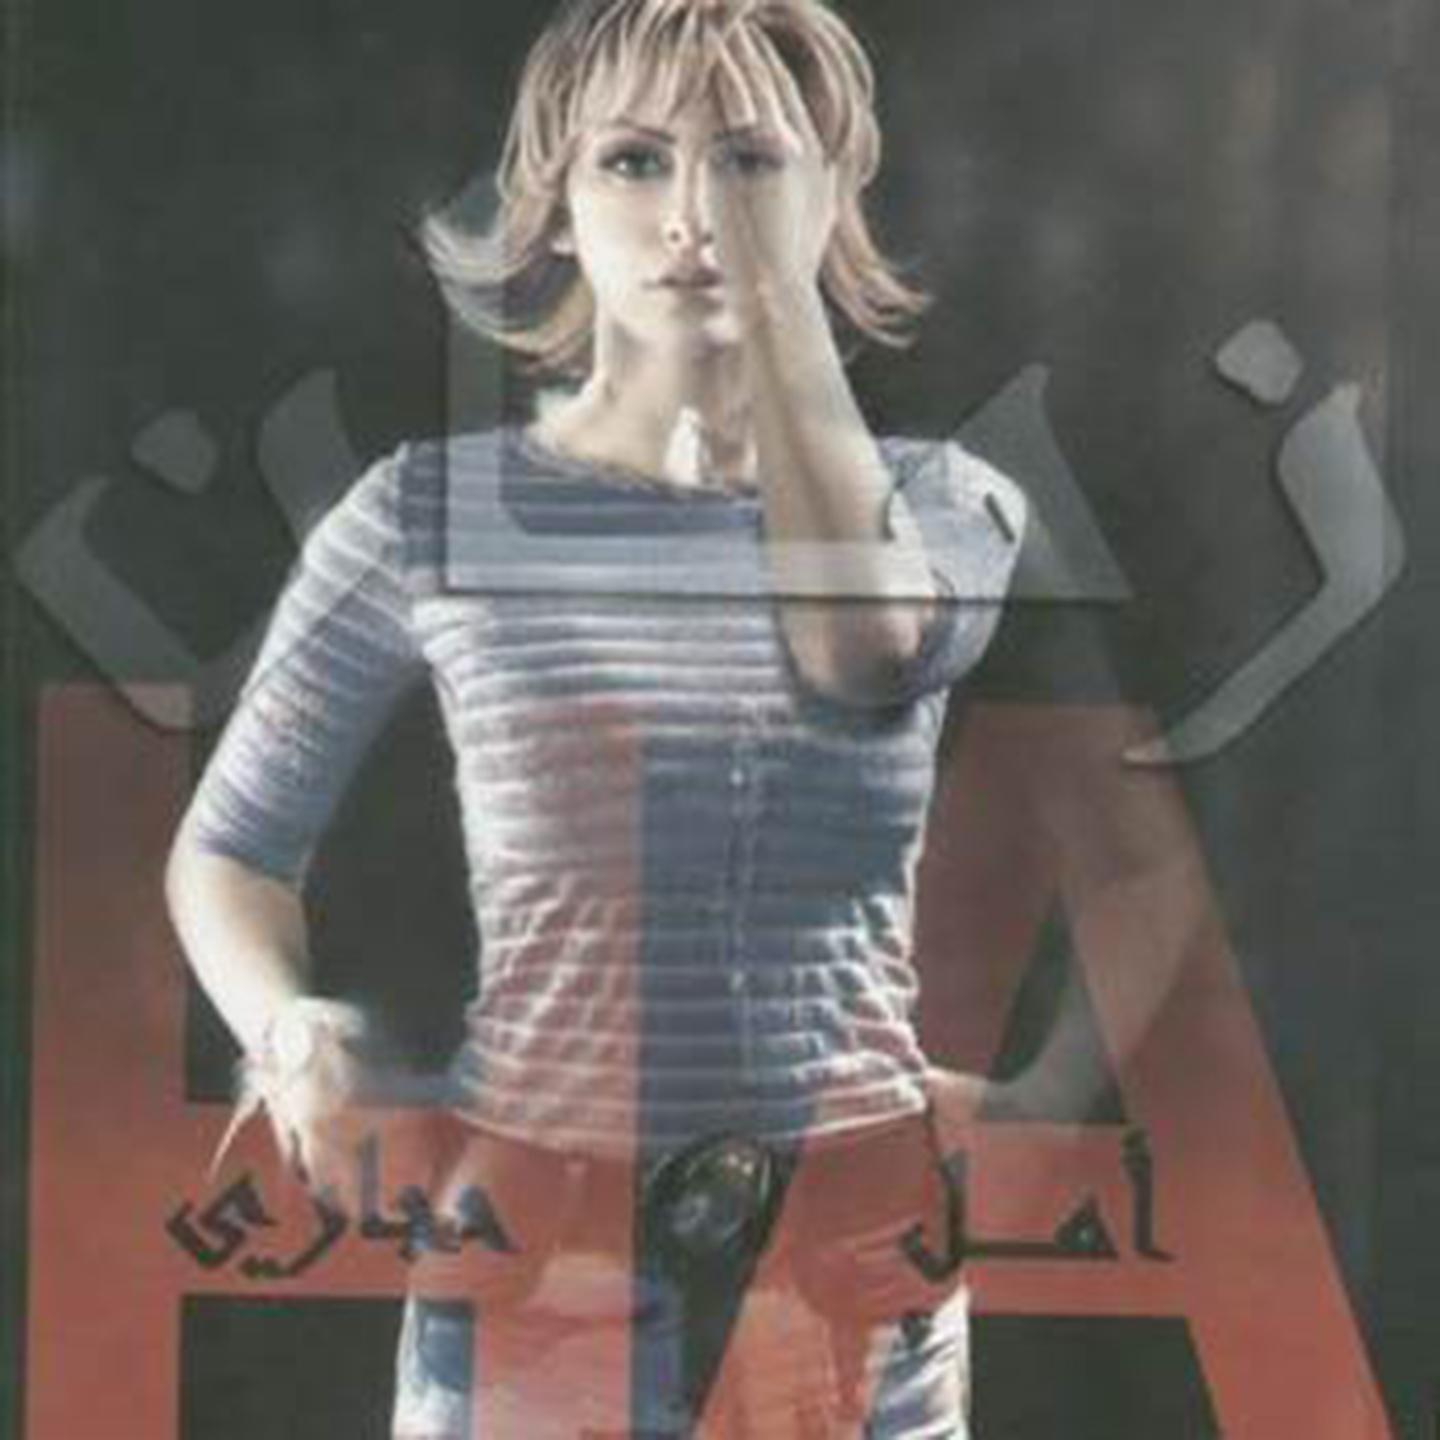 Постер альбома Zaman